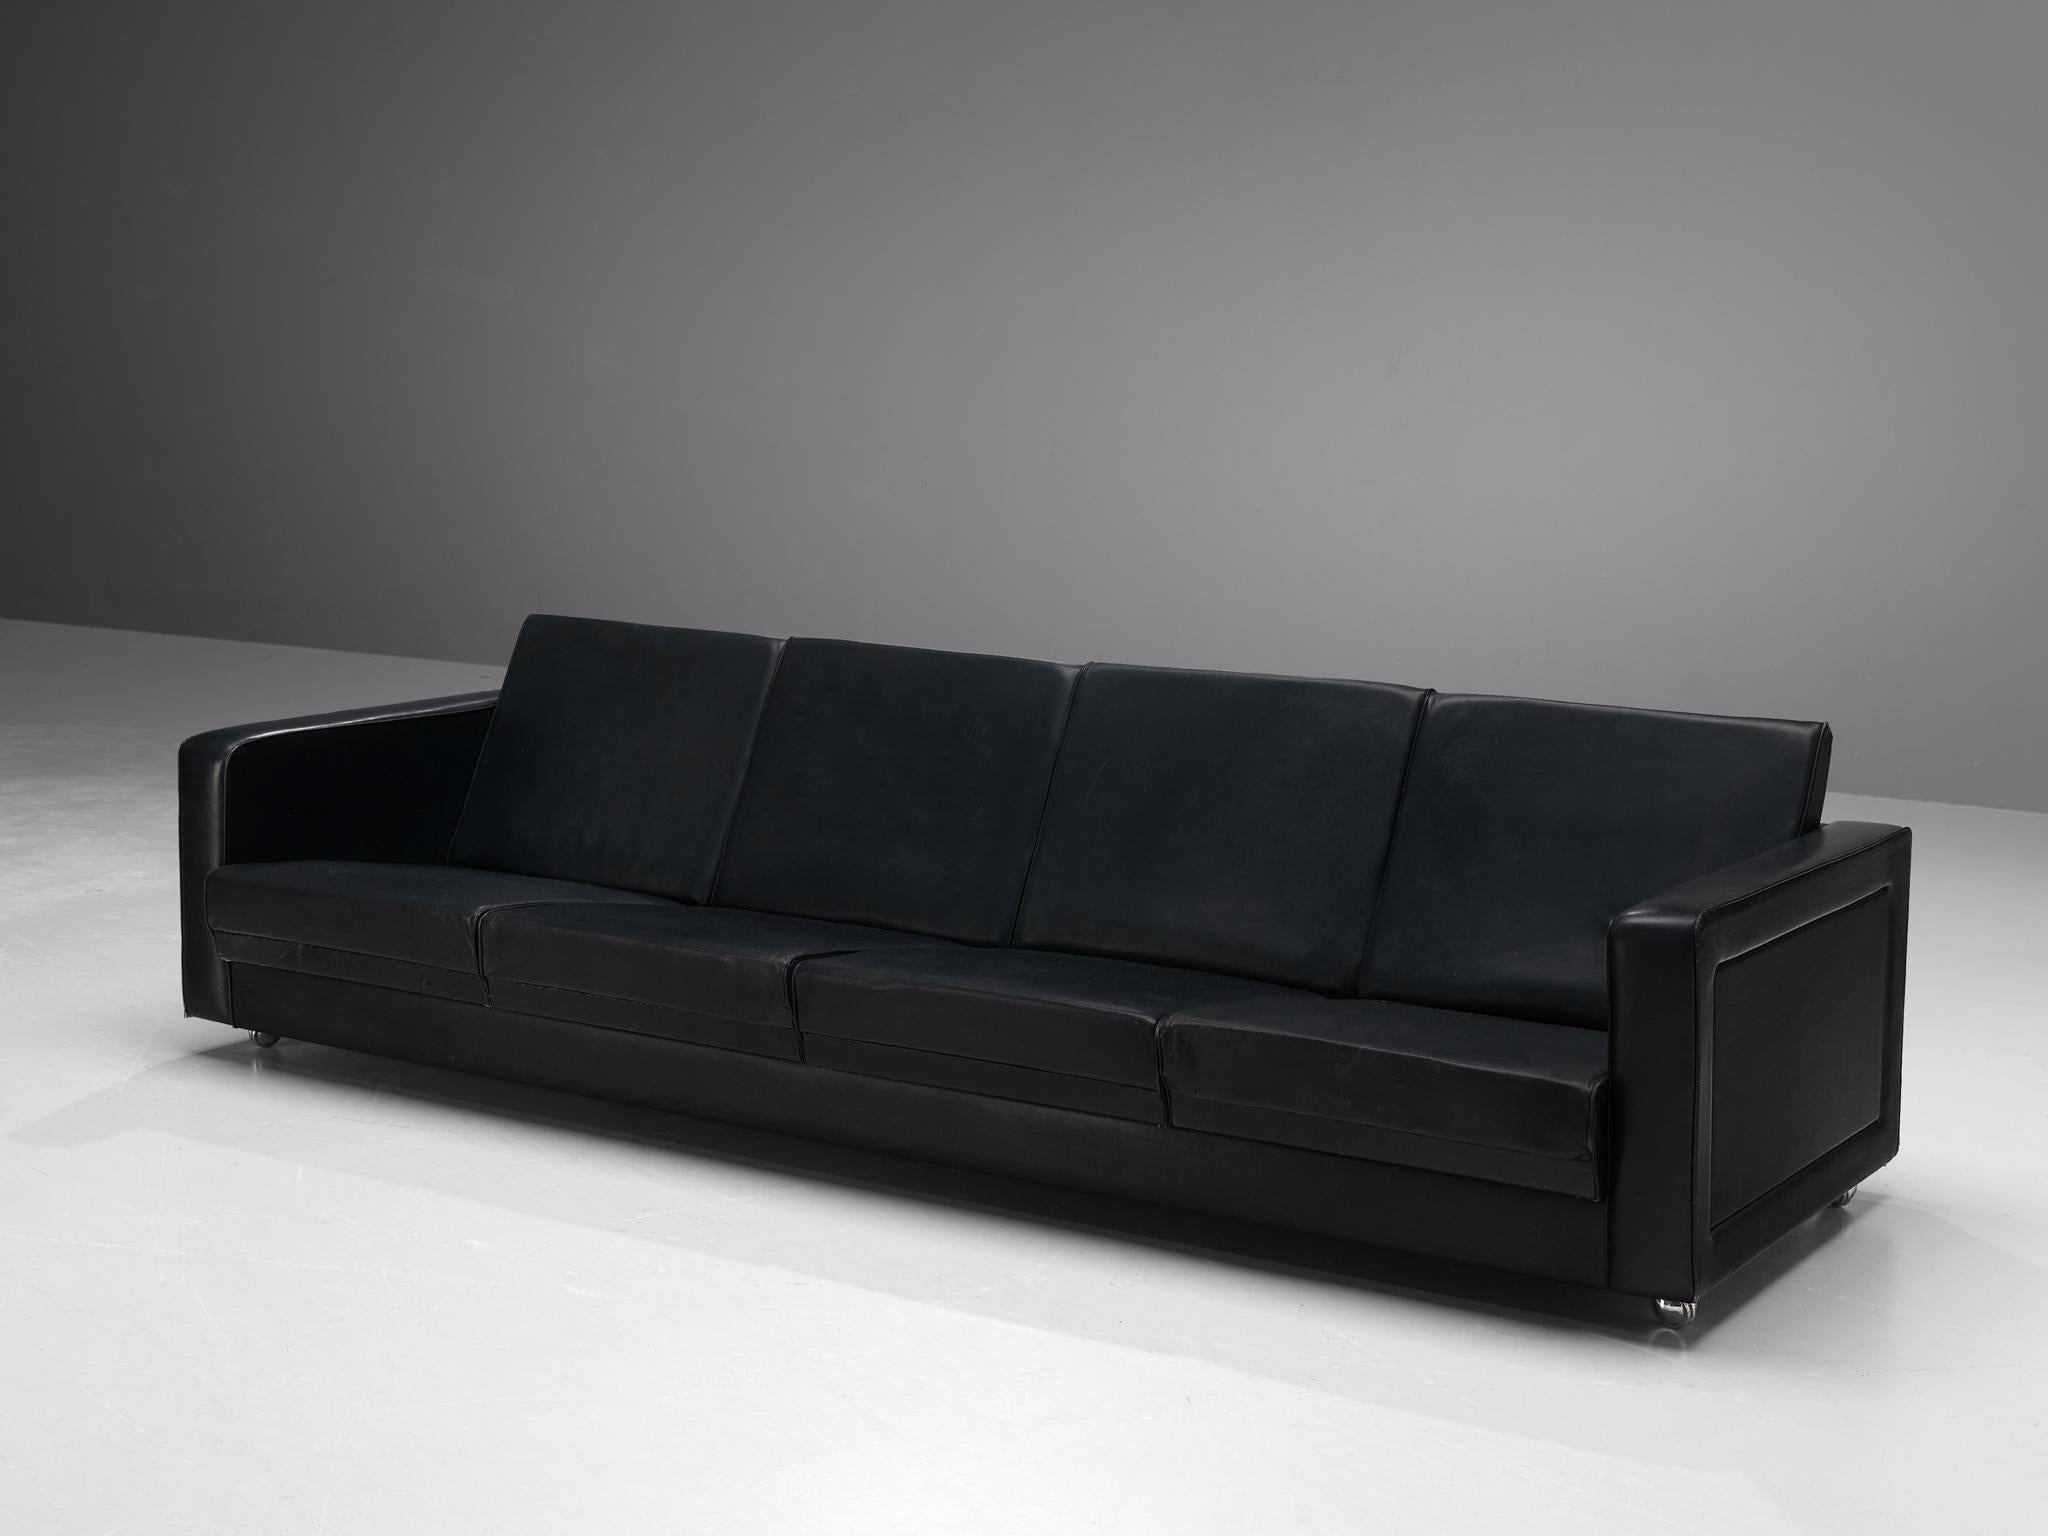 Sleek Four-Seat Danish Sofa in Black Leatherette